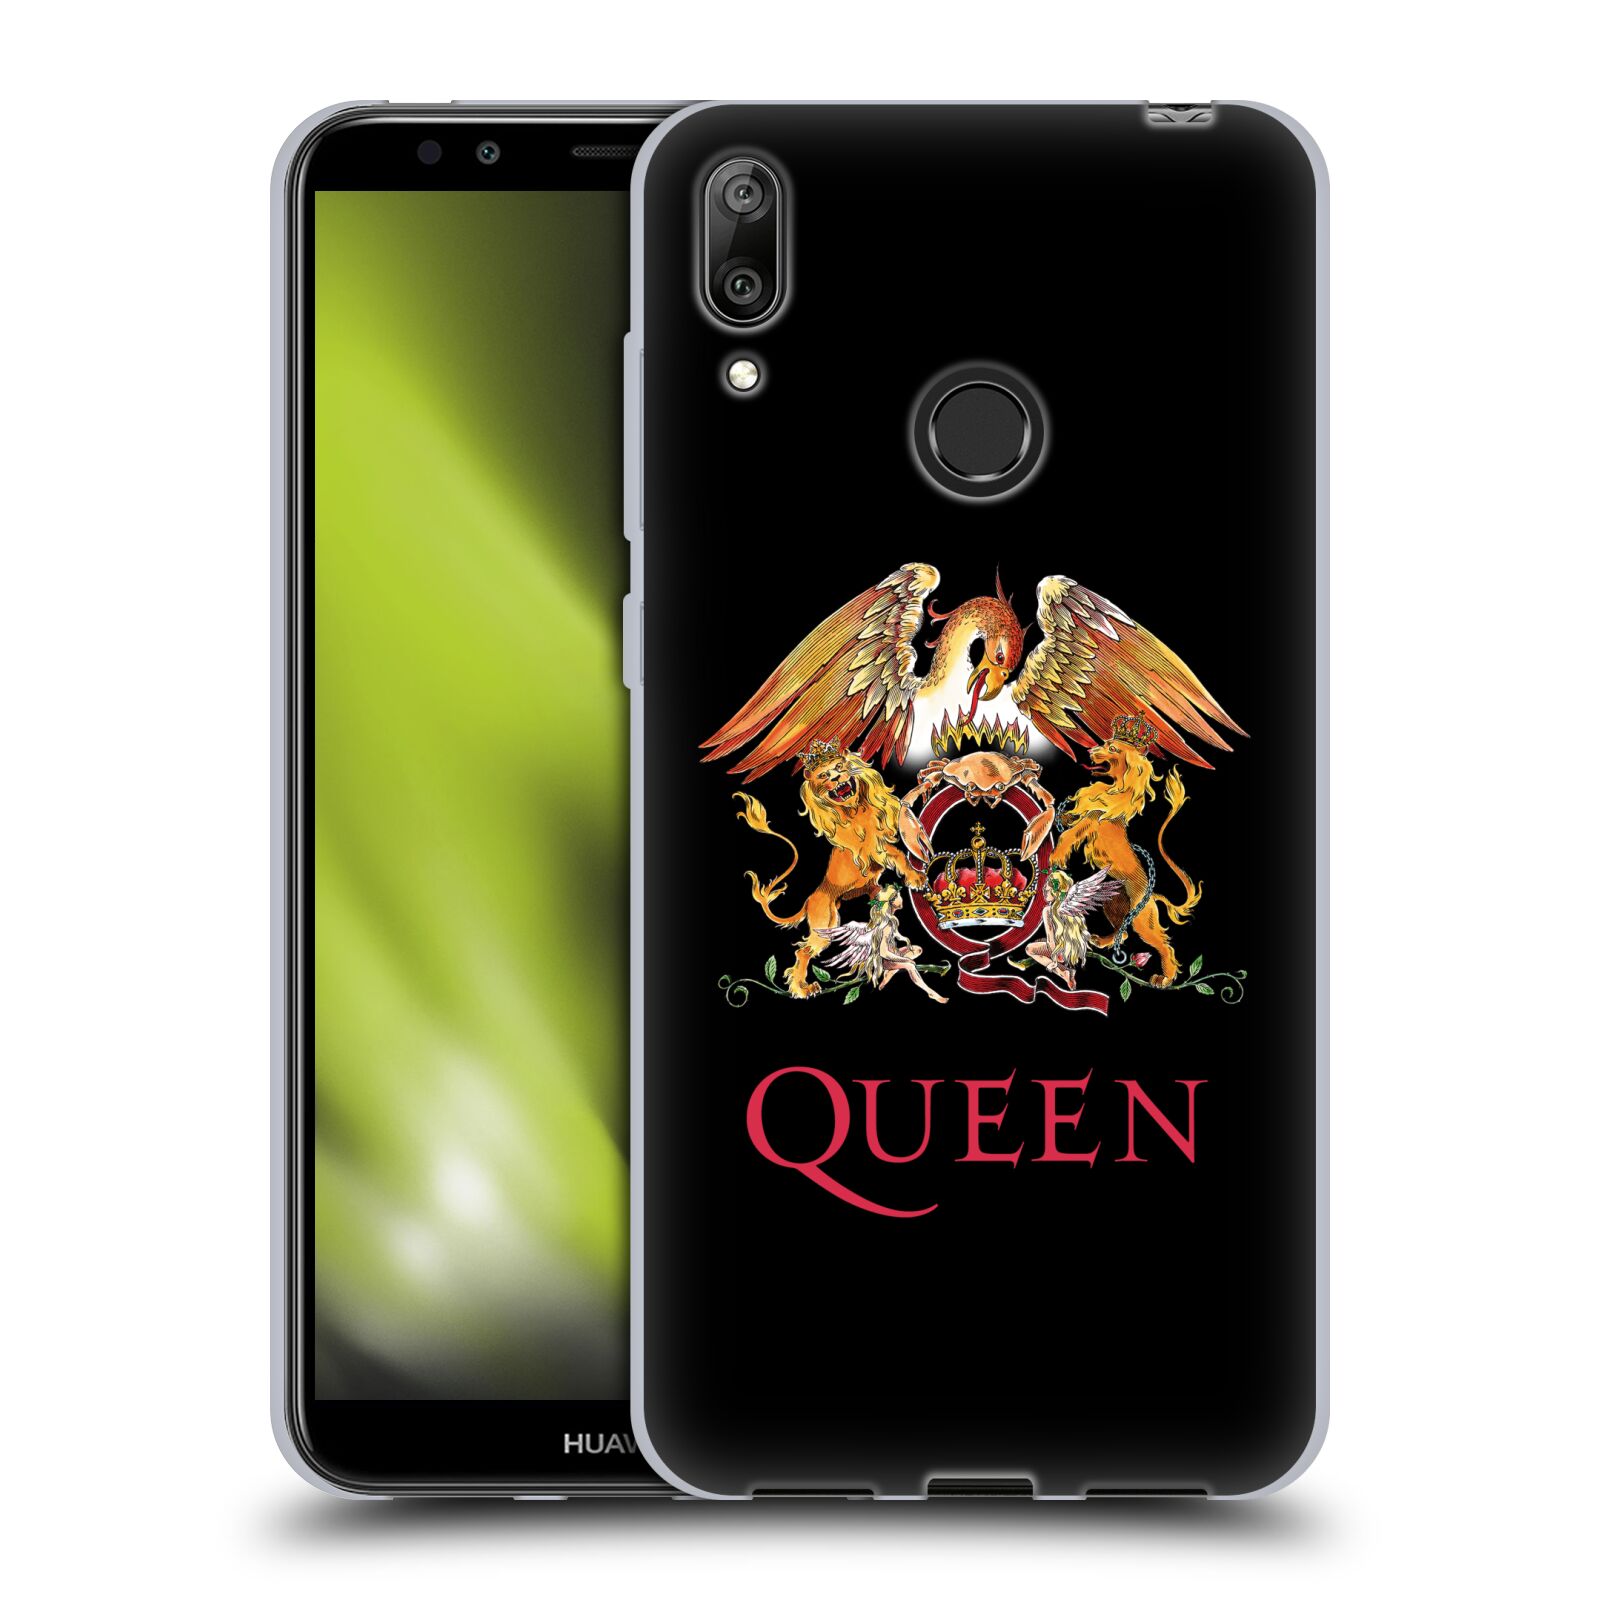 Silikonové pouzdro na mobil Huawei Y7 (2019) - Head Case - Queen - Logo